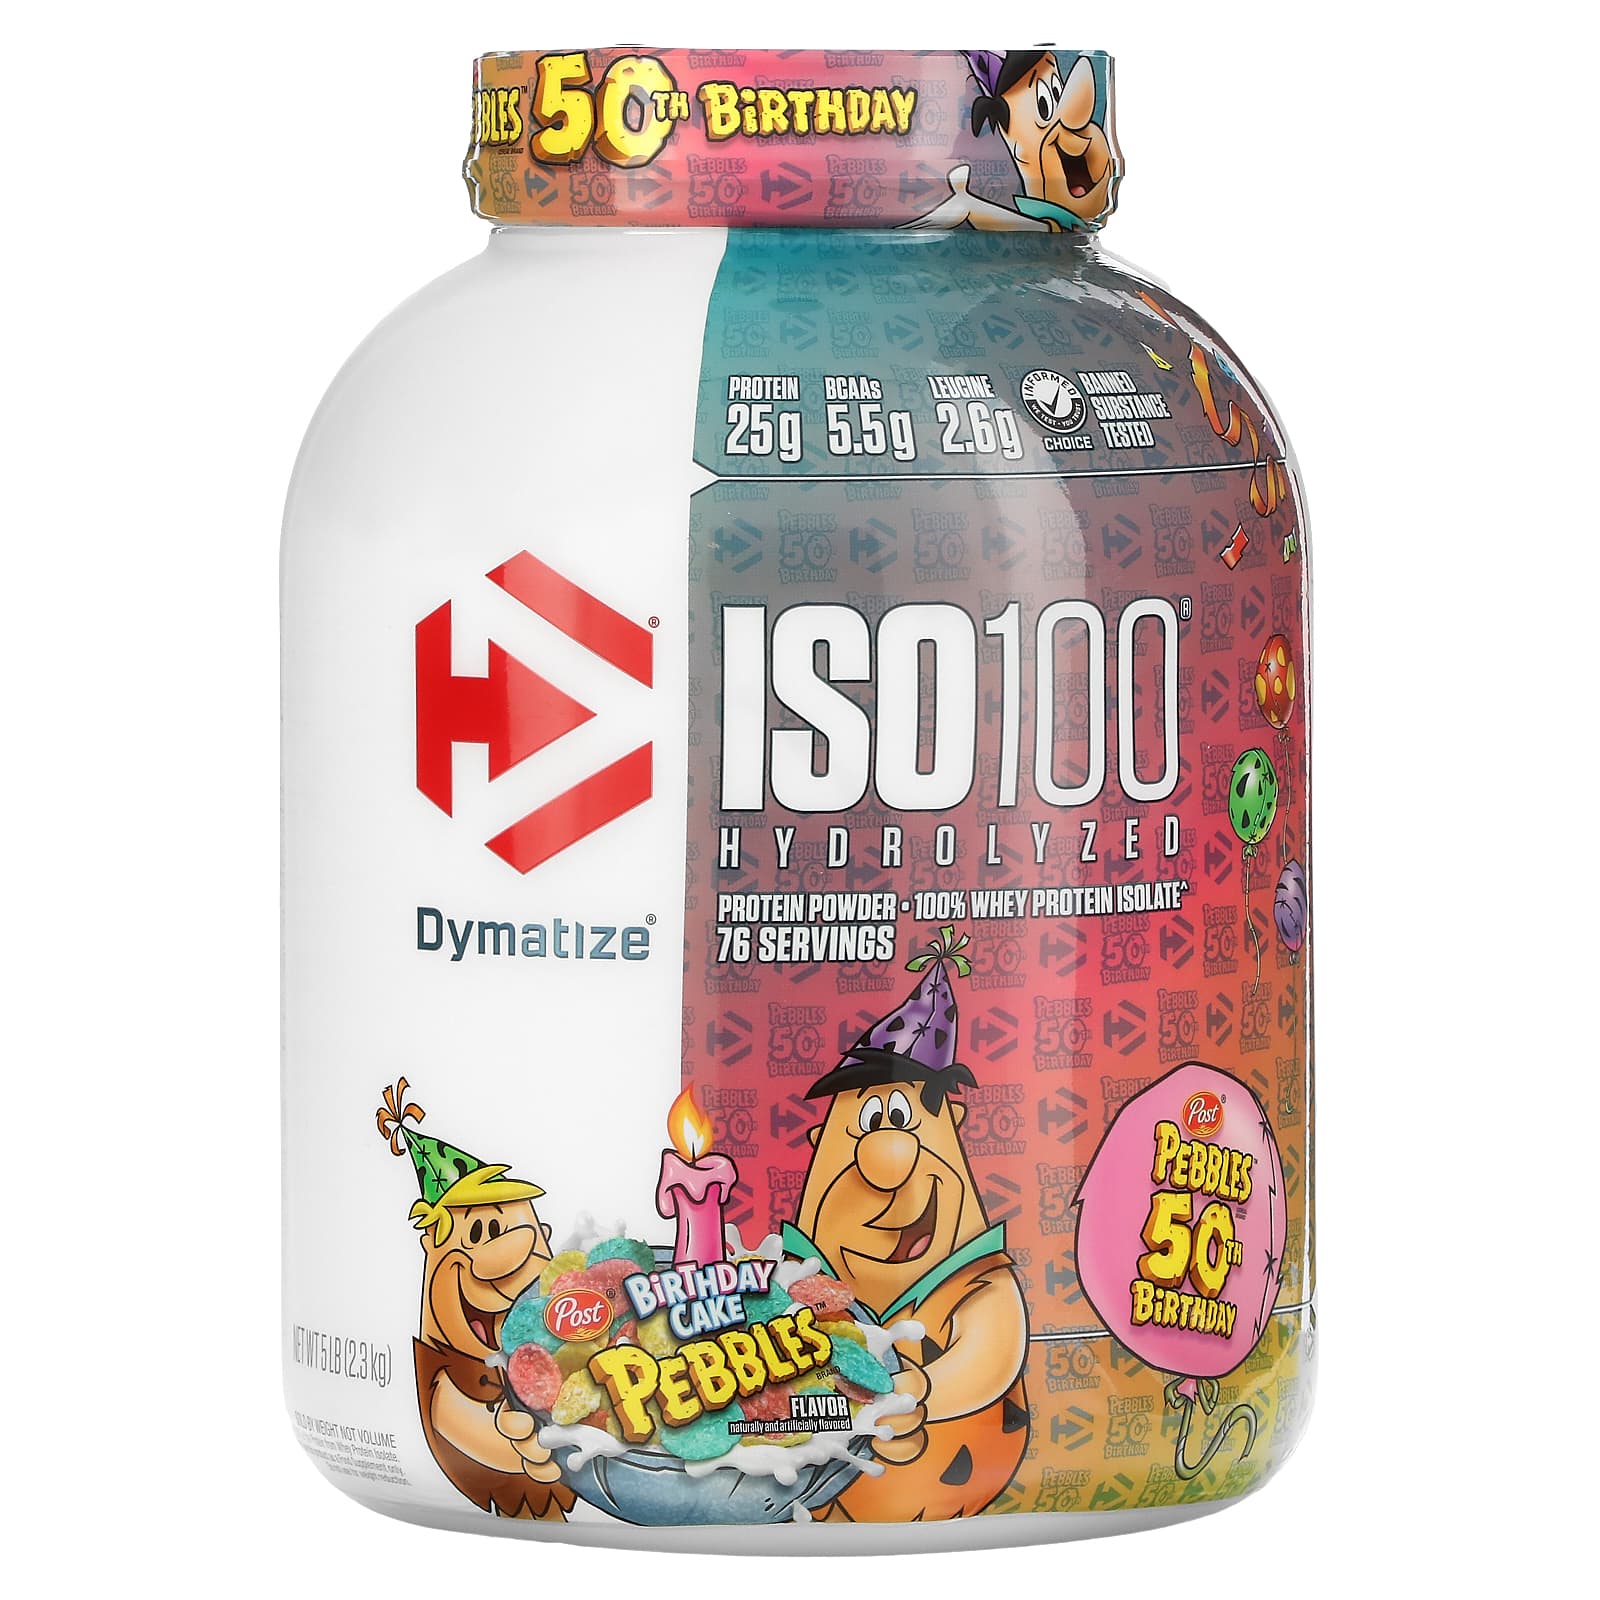 Dymatize-ISO100 Hydrolyzed-100% Whey Protein Isolate-Birthday Cake Pebbles-5 lb (2.3 kg)